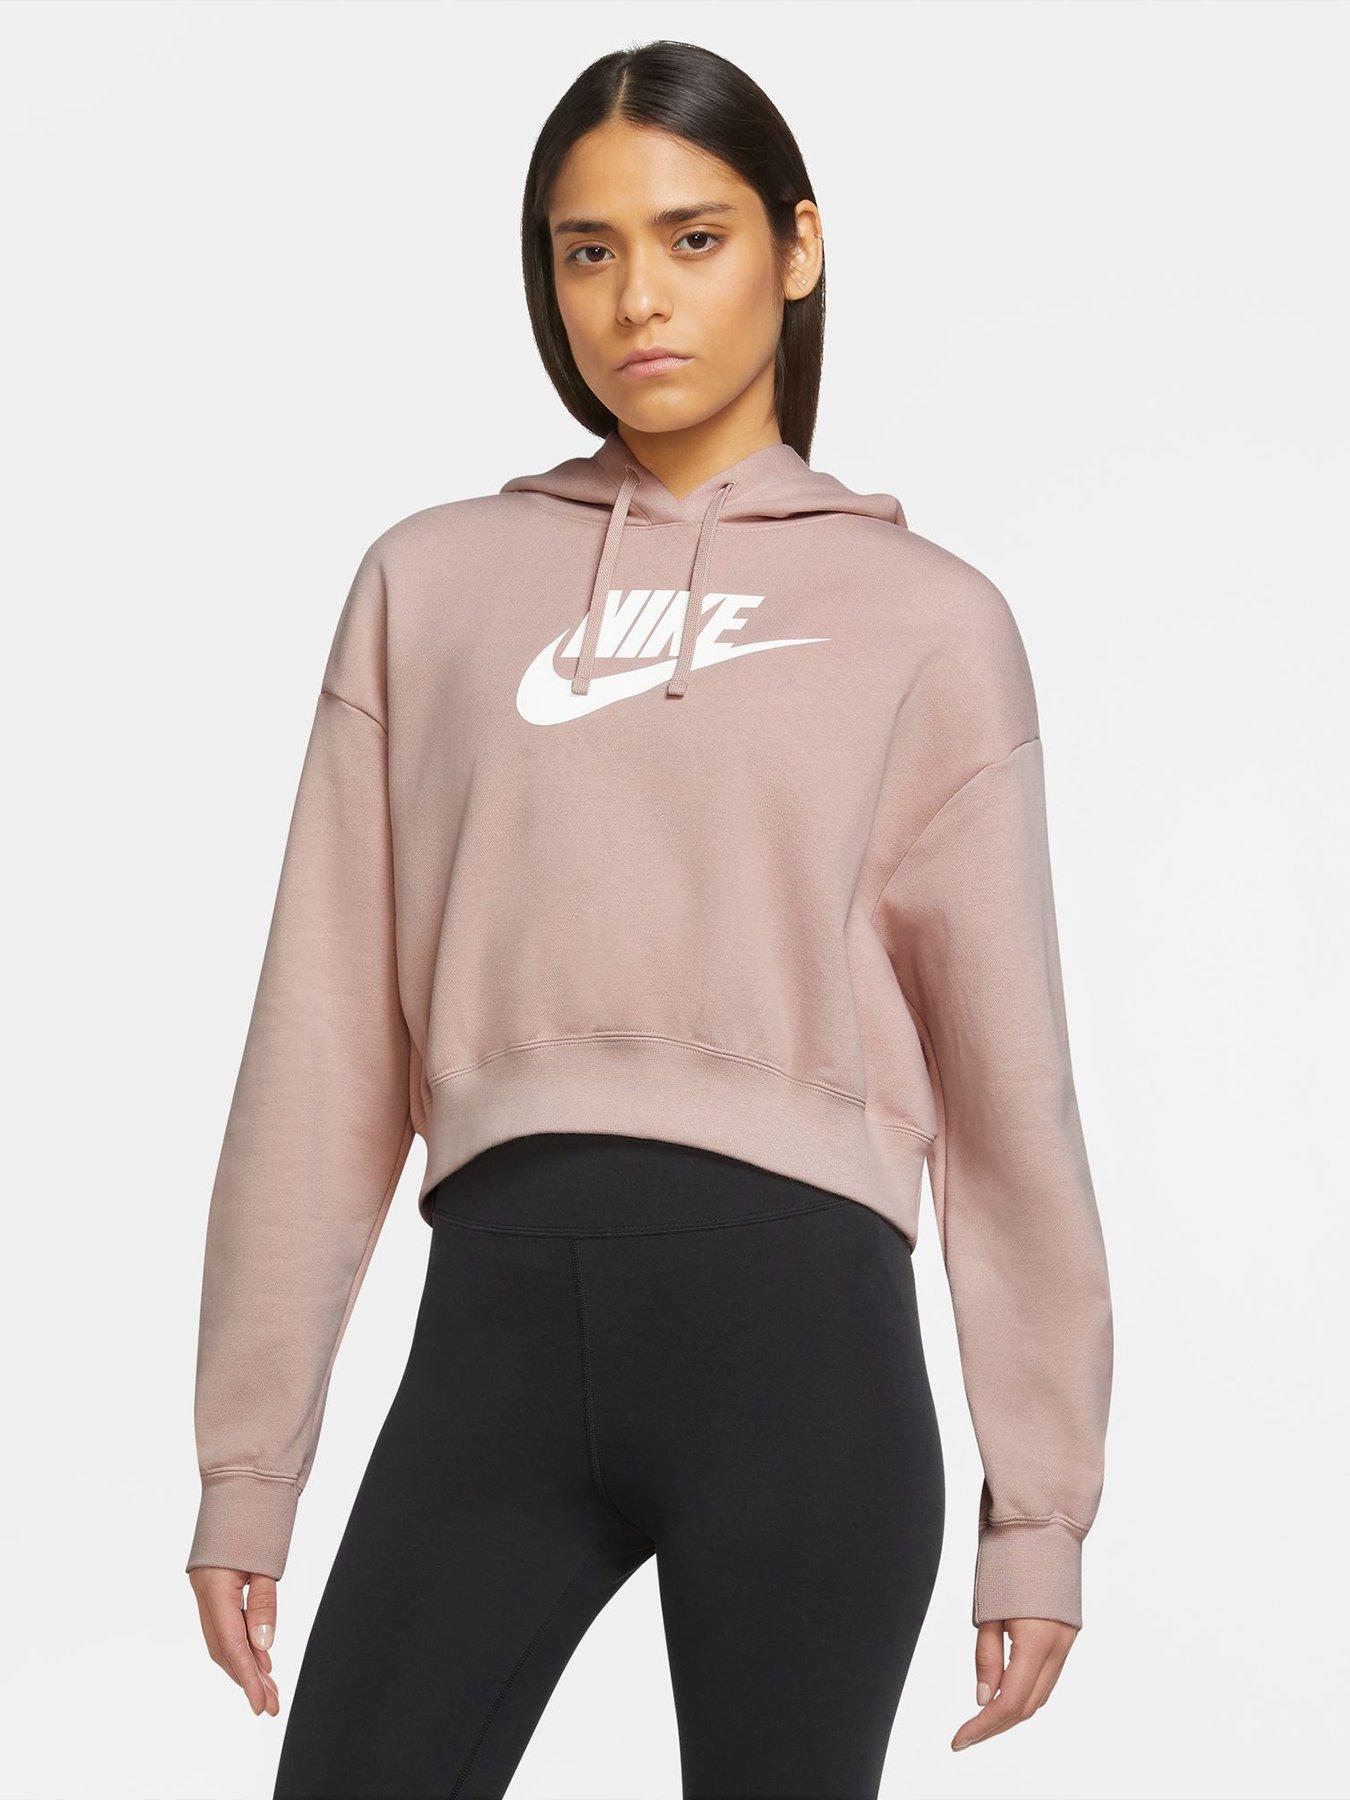 WOMEN FASHION Jumpers & Sweatshirts Fleece UP sweatshirt Pink S discount 99% 